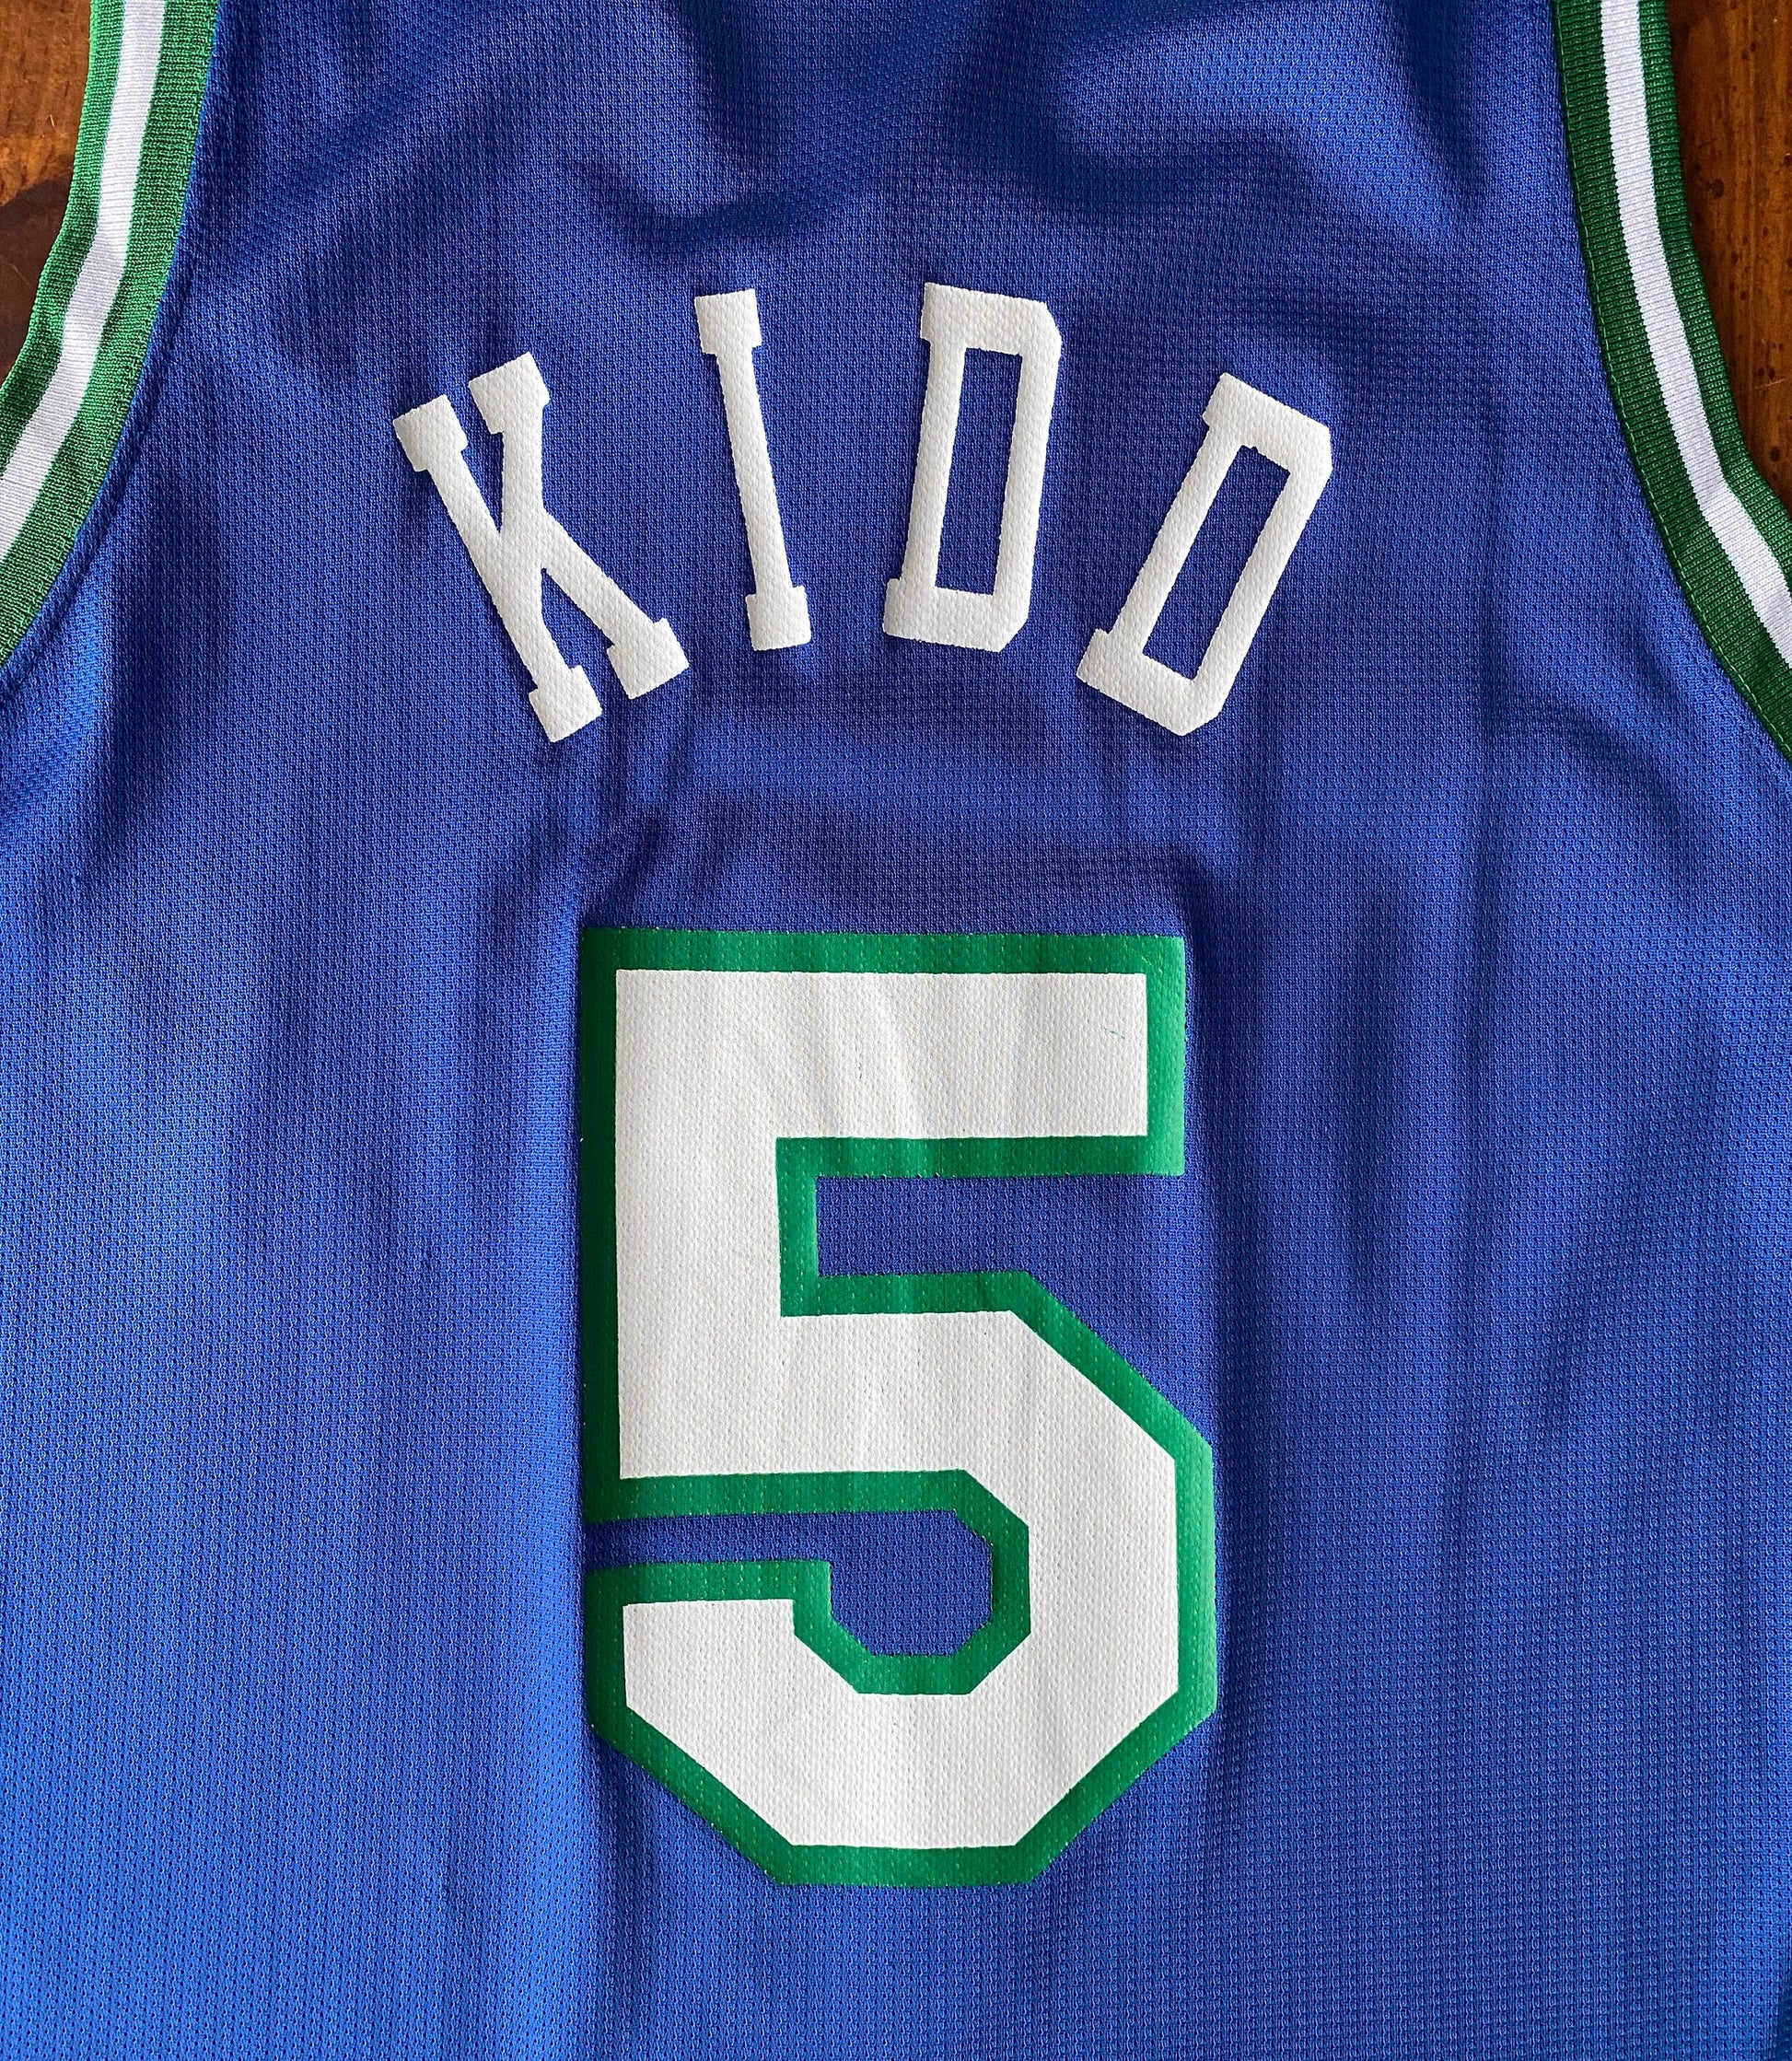 VTG 90s NBA Champion Dallas #5 Kidd Jersey - Size 40, Made in USA